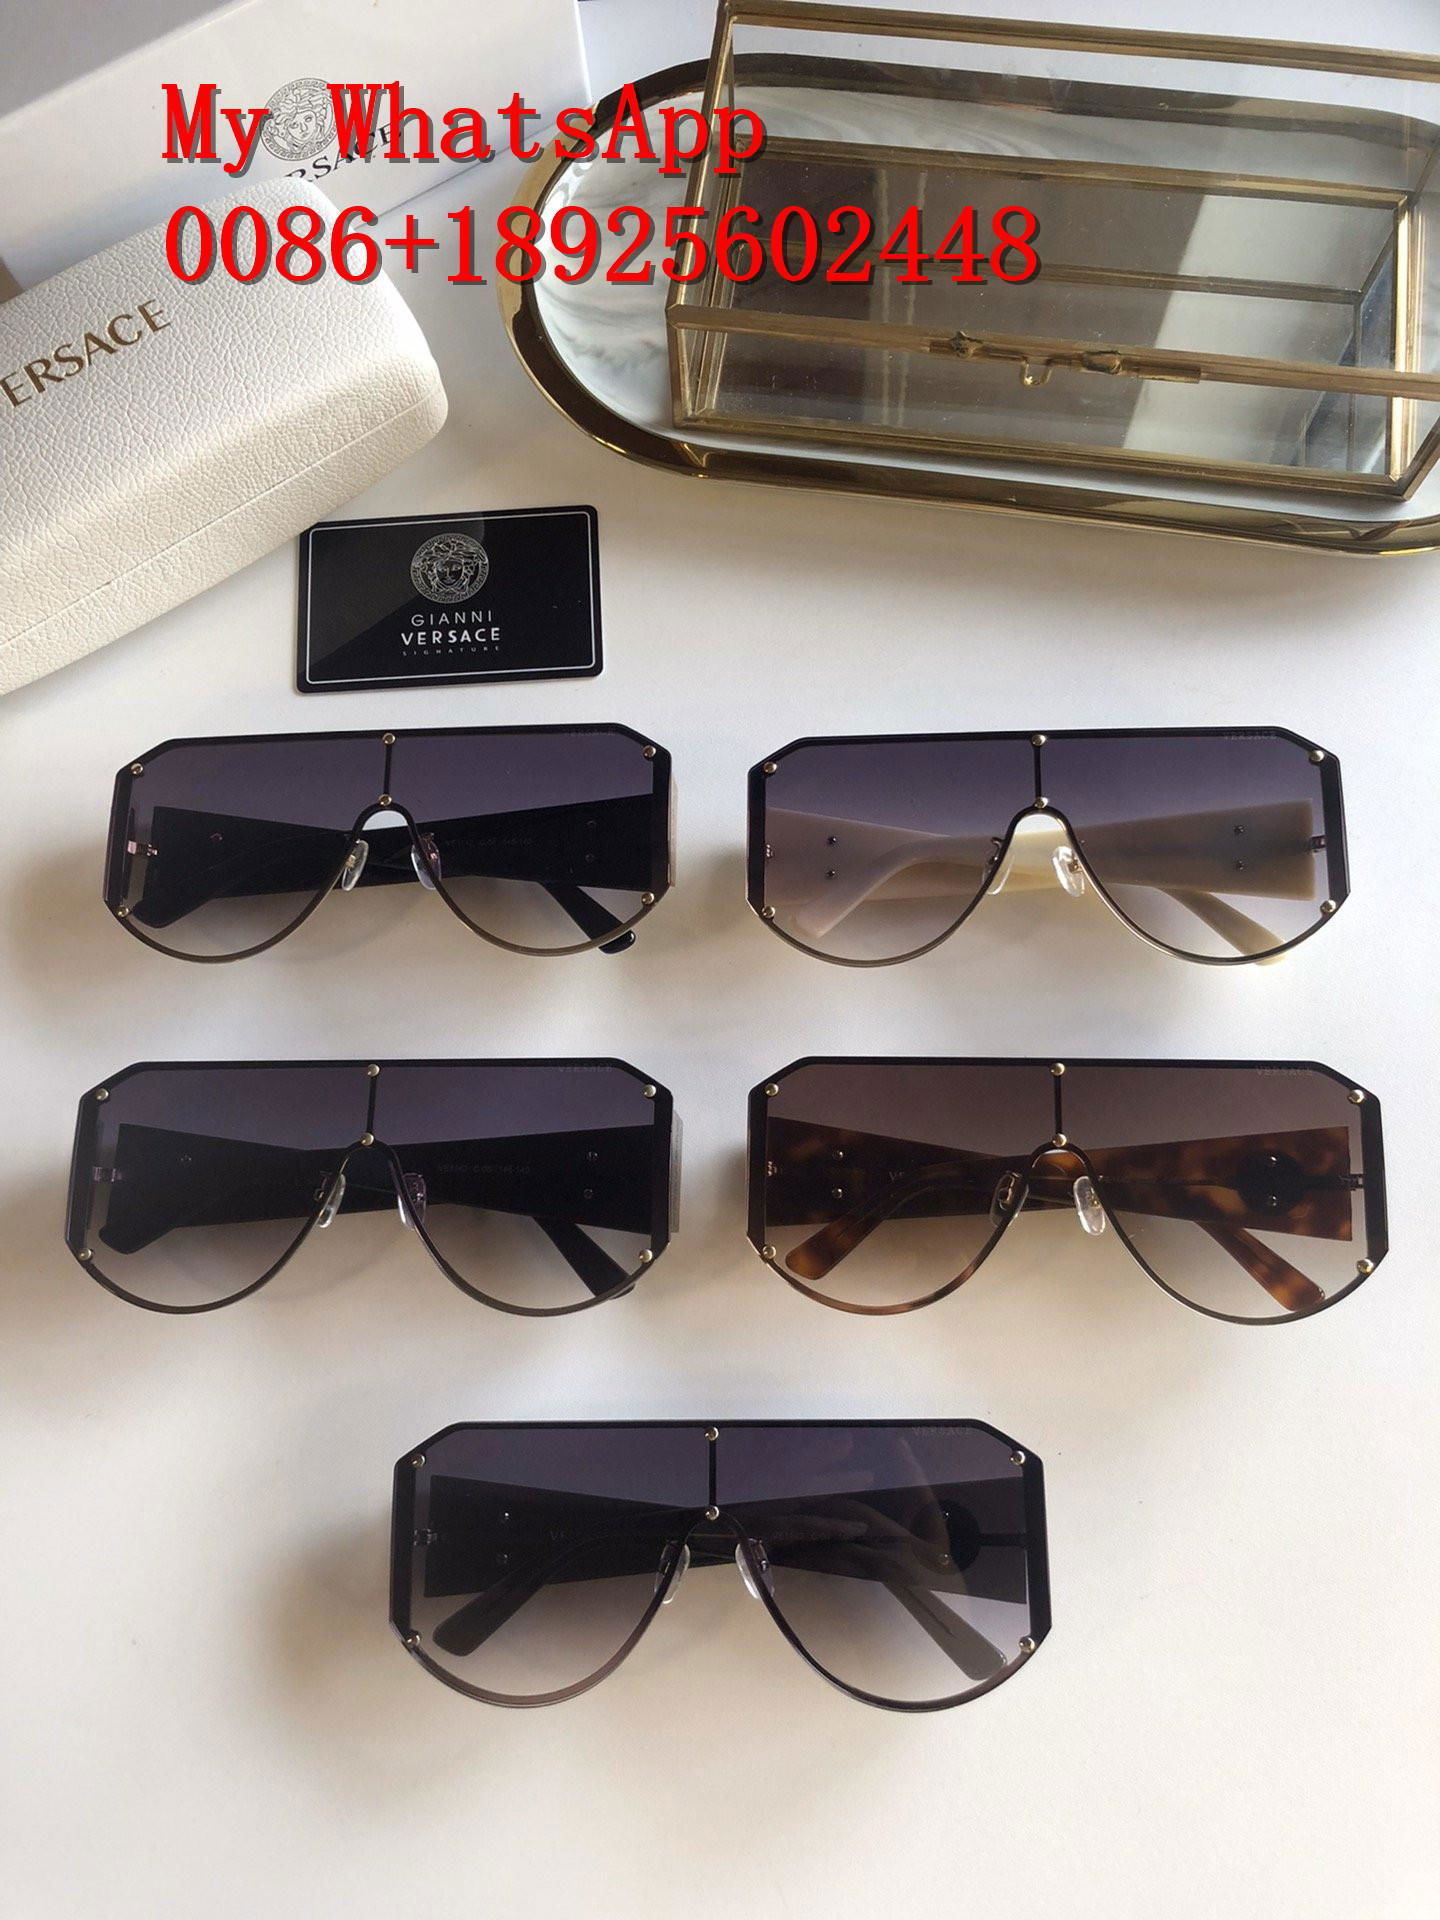 Wholesale         sunglasses          glasses1:1 quality sunglasses  5